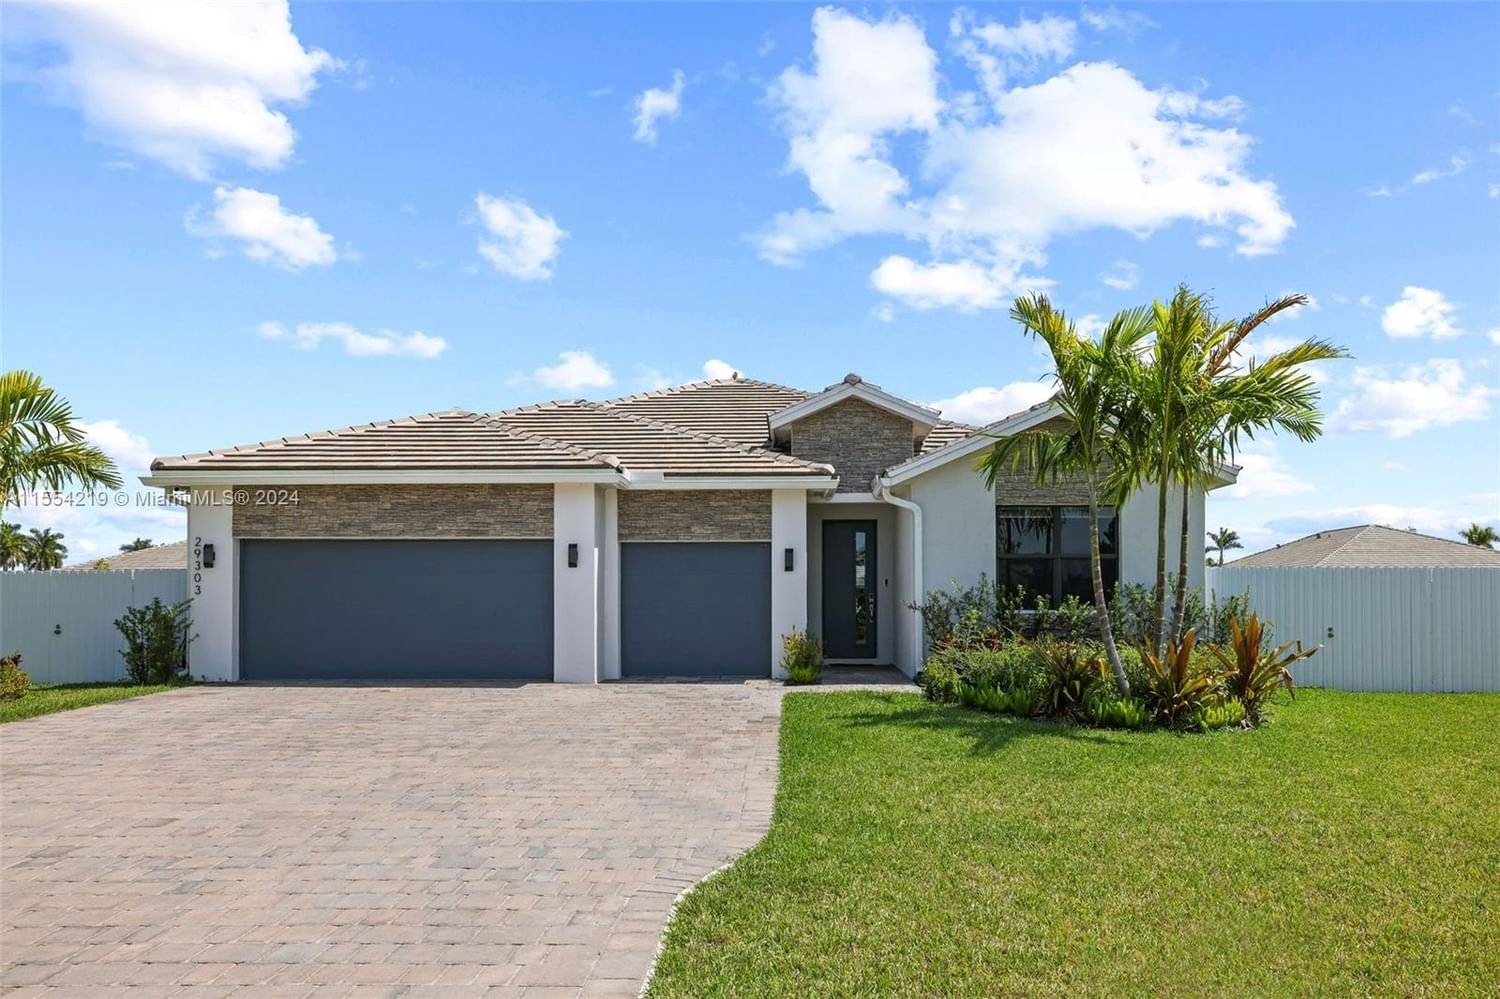 Real estate property located at 29303 179th Ave, Miami-Dade County, Krome Grove Estates, Homestead, FL